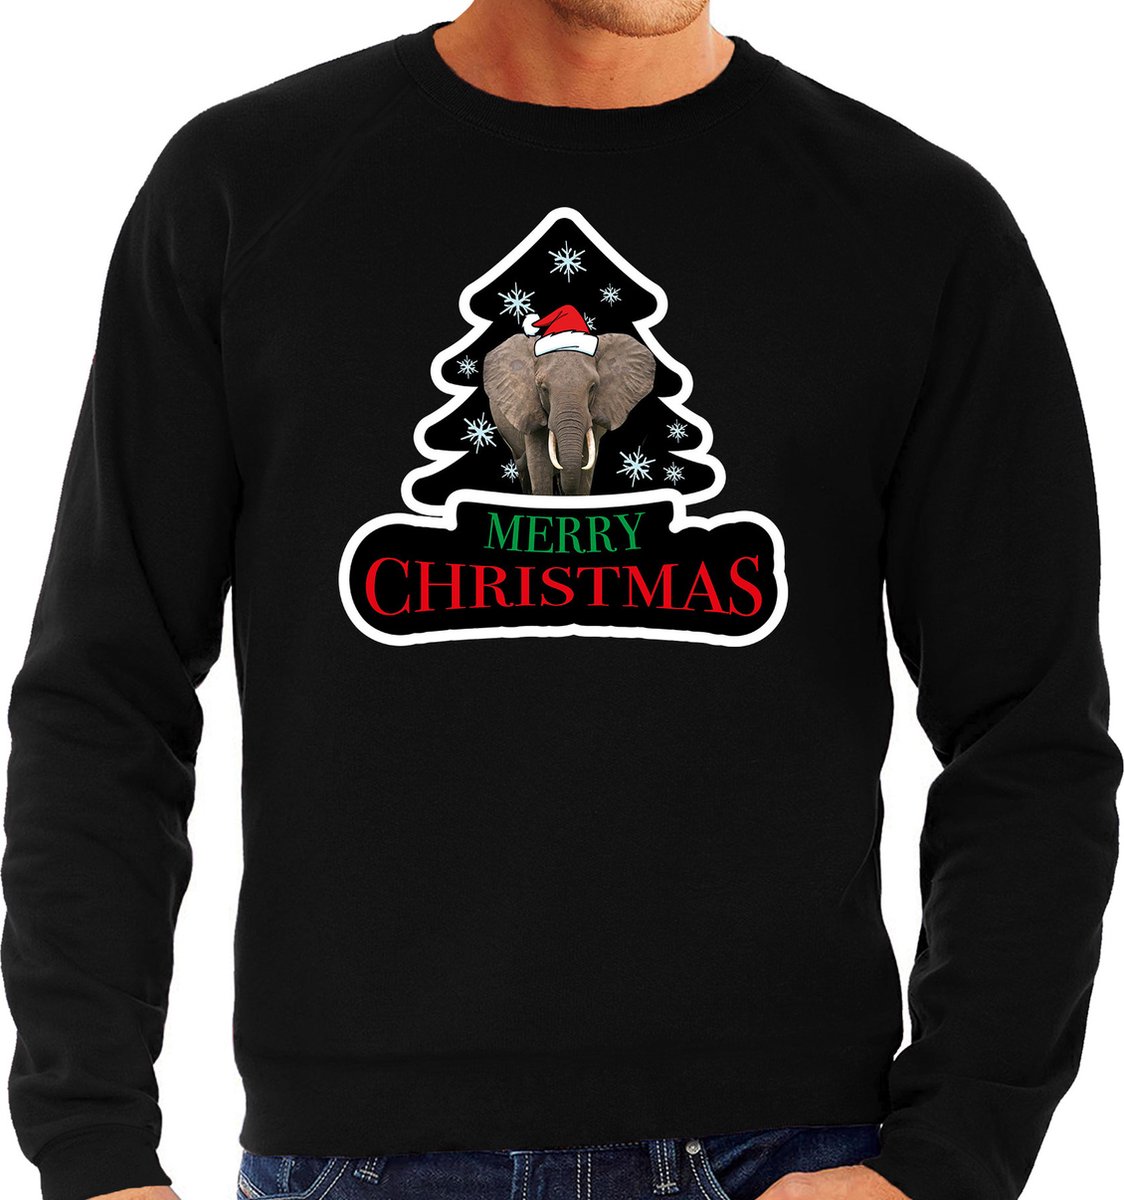 Dieren kersttrui olifant zwart heren - Foute olifanten kerstsweater - Kerst outfit dieren liefhebber XXL